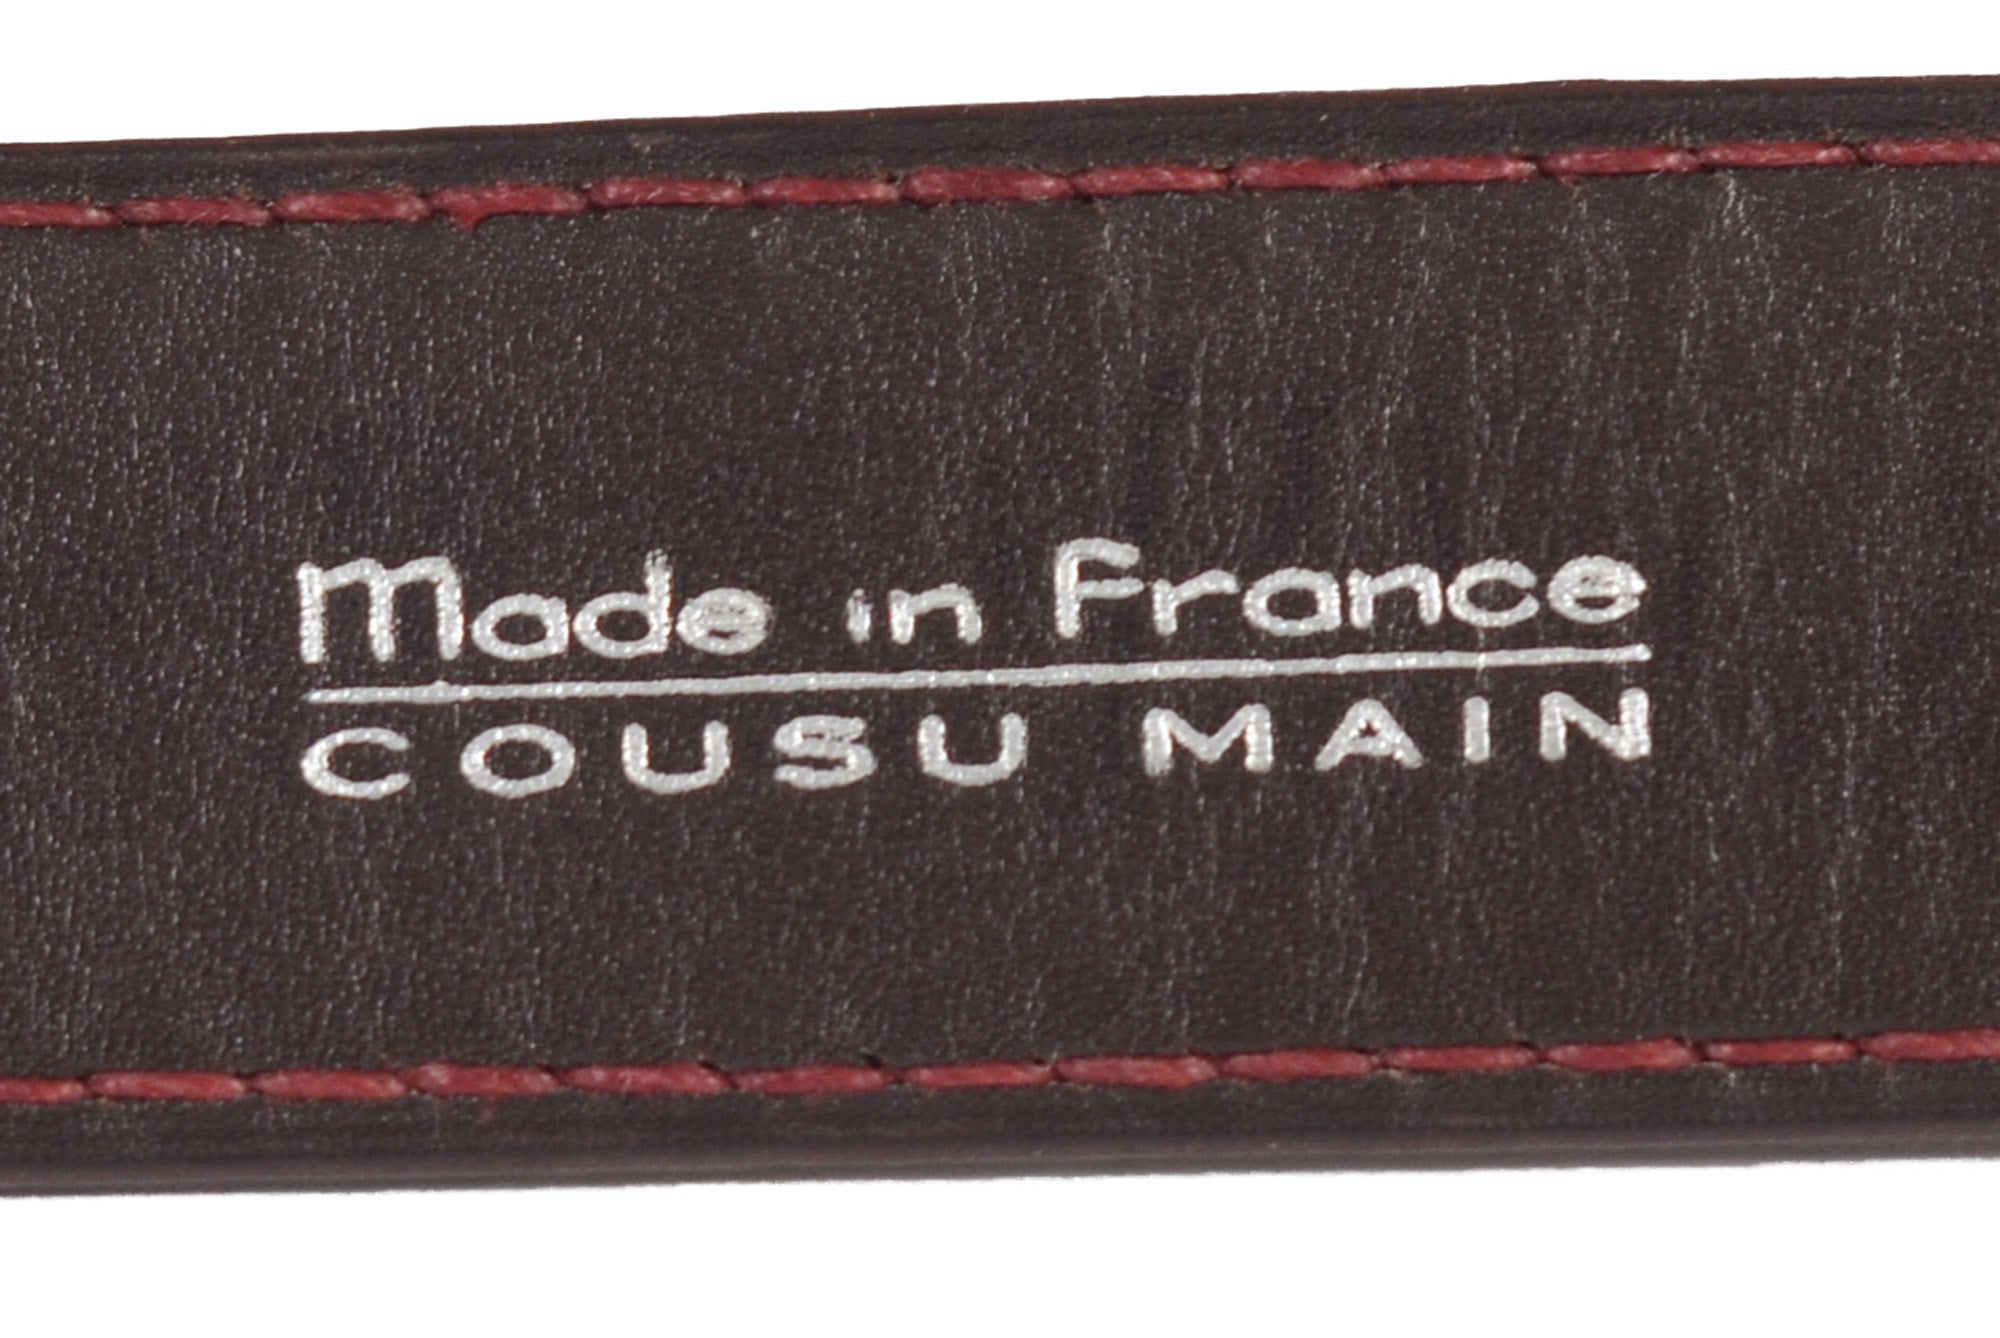 DURET Burgundy Crocodile Leather Belt with Gold-Tone Square Buckle 35" NEW 90cm DURET